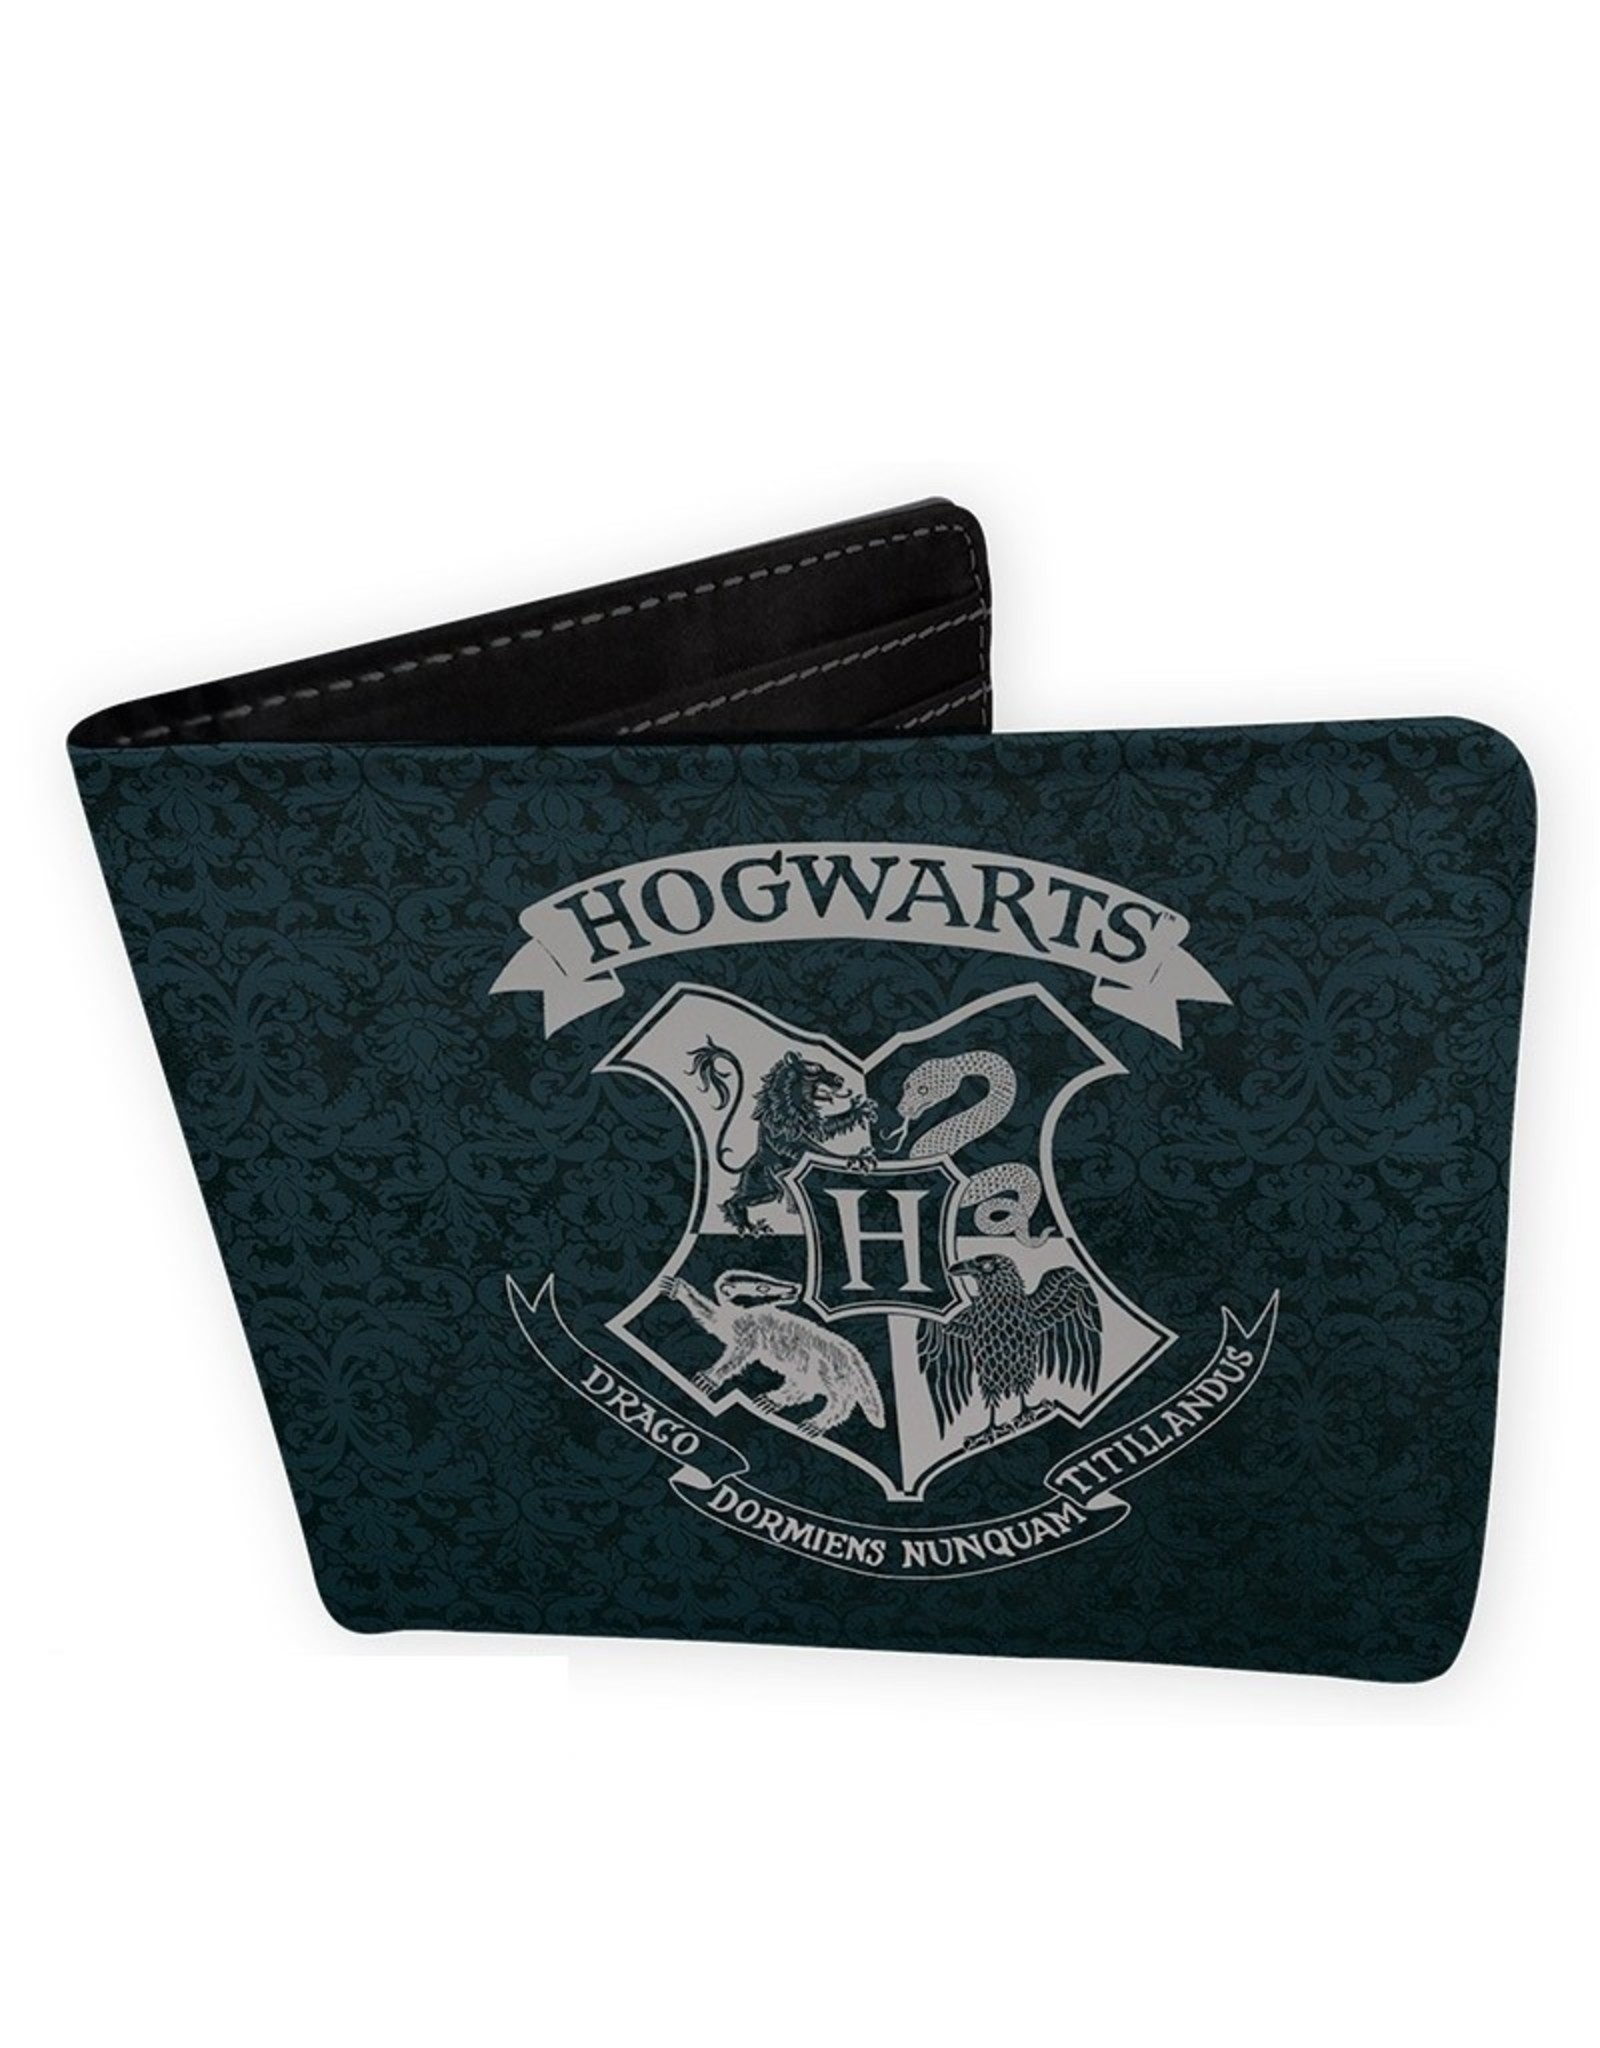 Harry Potter Harry Potter bags - Harry Potter Hogwarts wallet